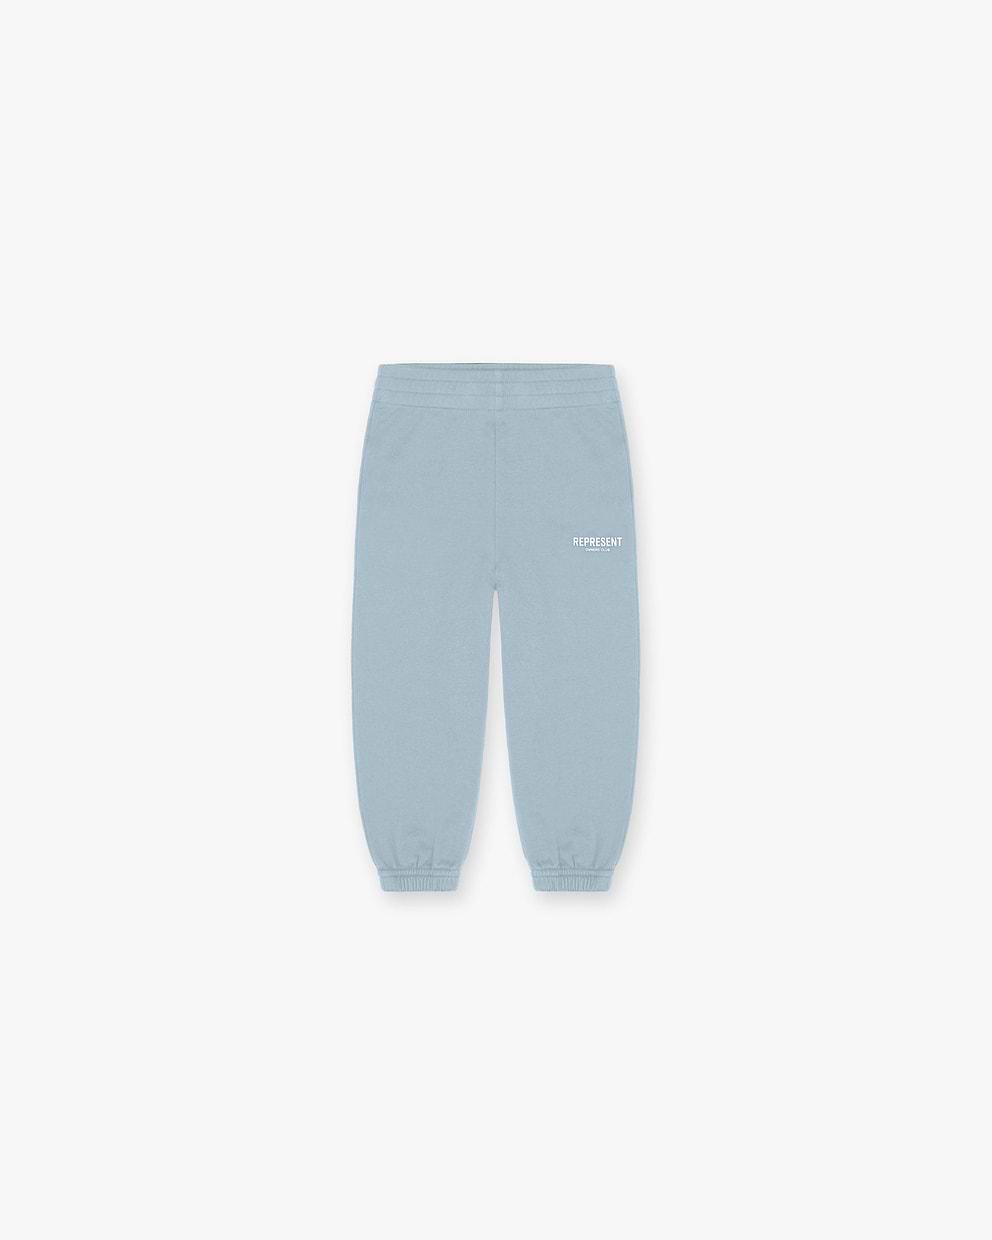 Represent Mini Owners Club Sweatpants - Powder Blue